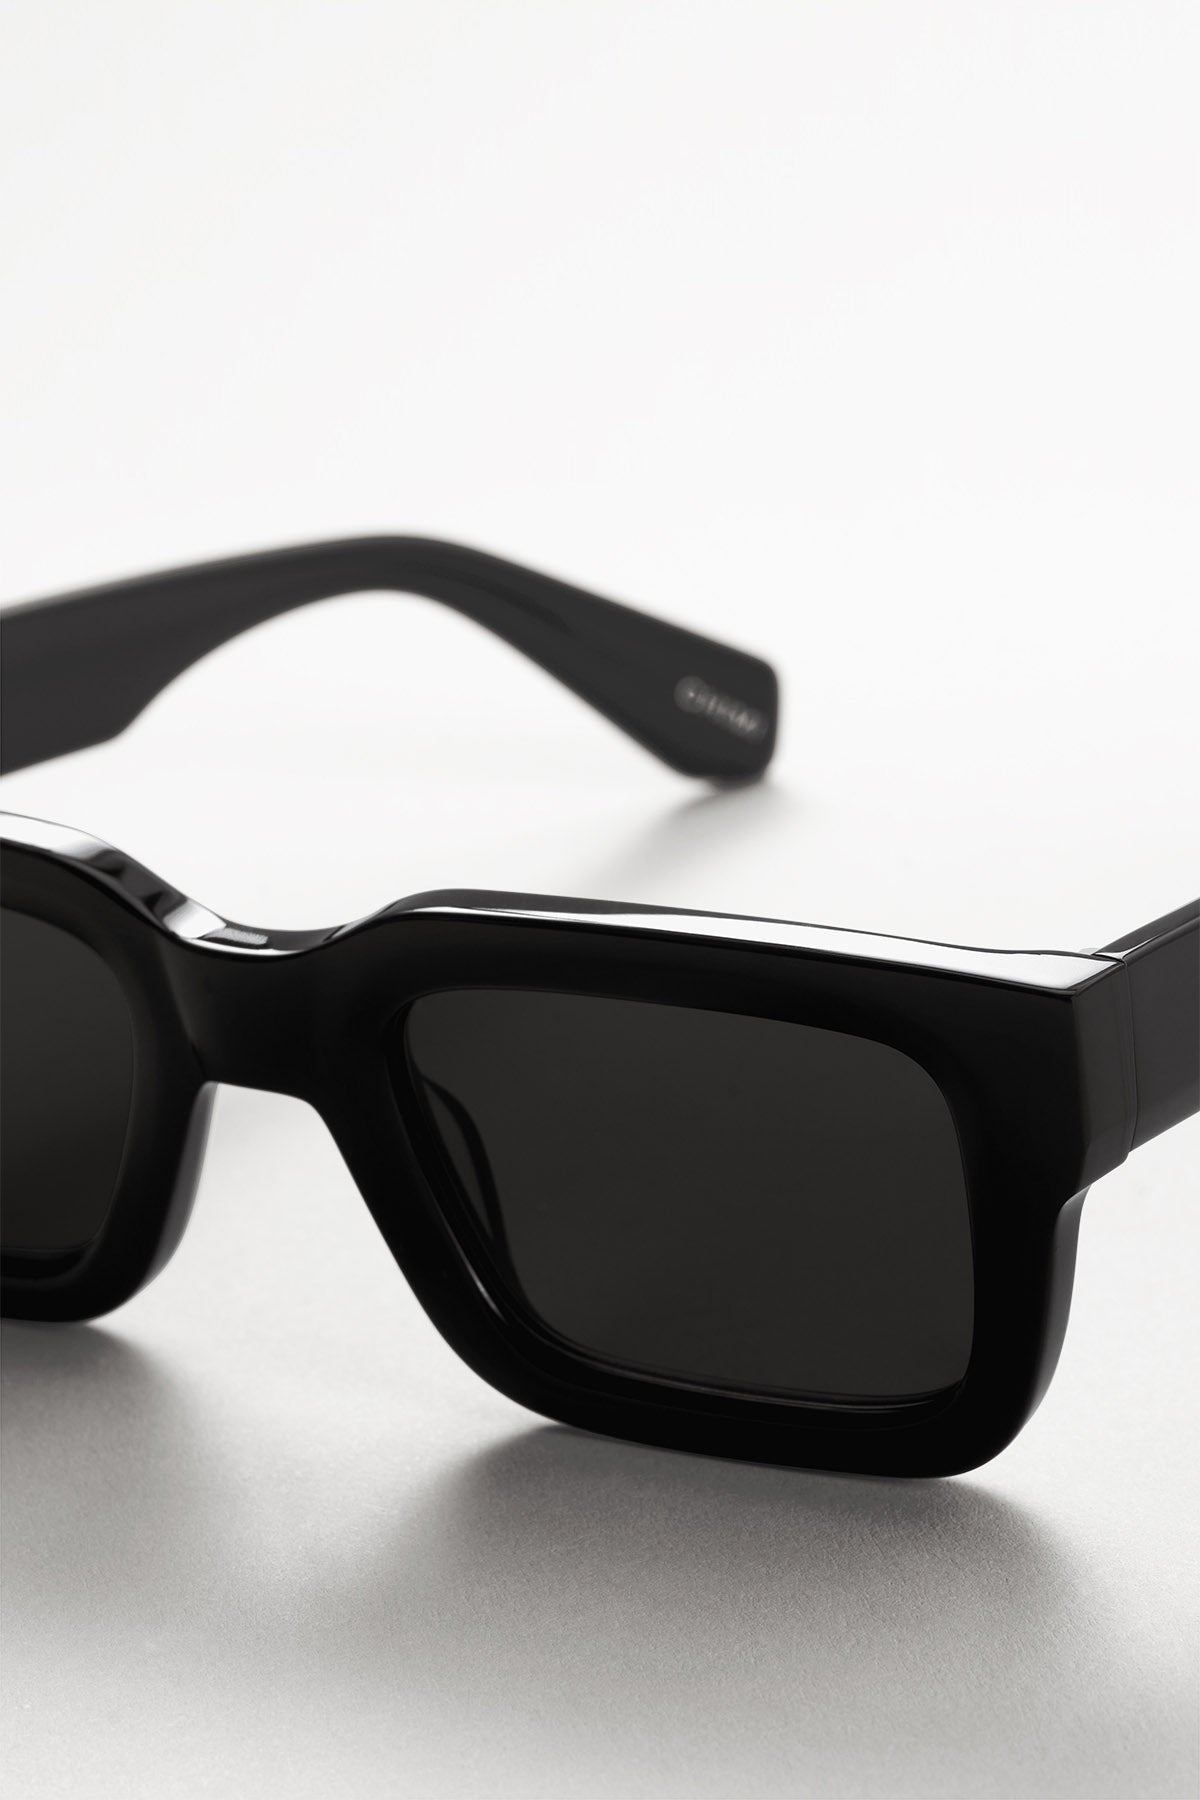   Chimi 05 Sunglasses Black Detail 